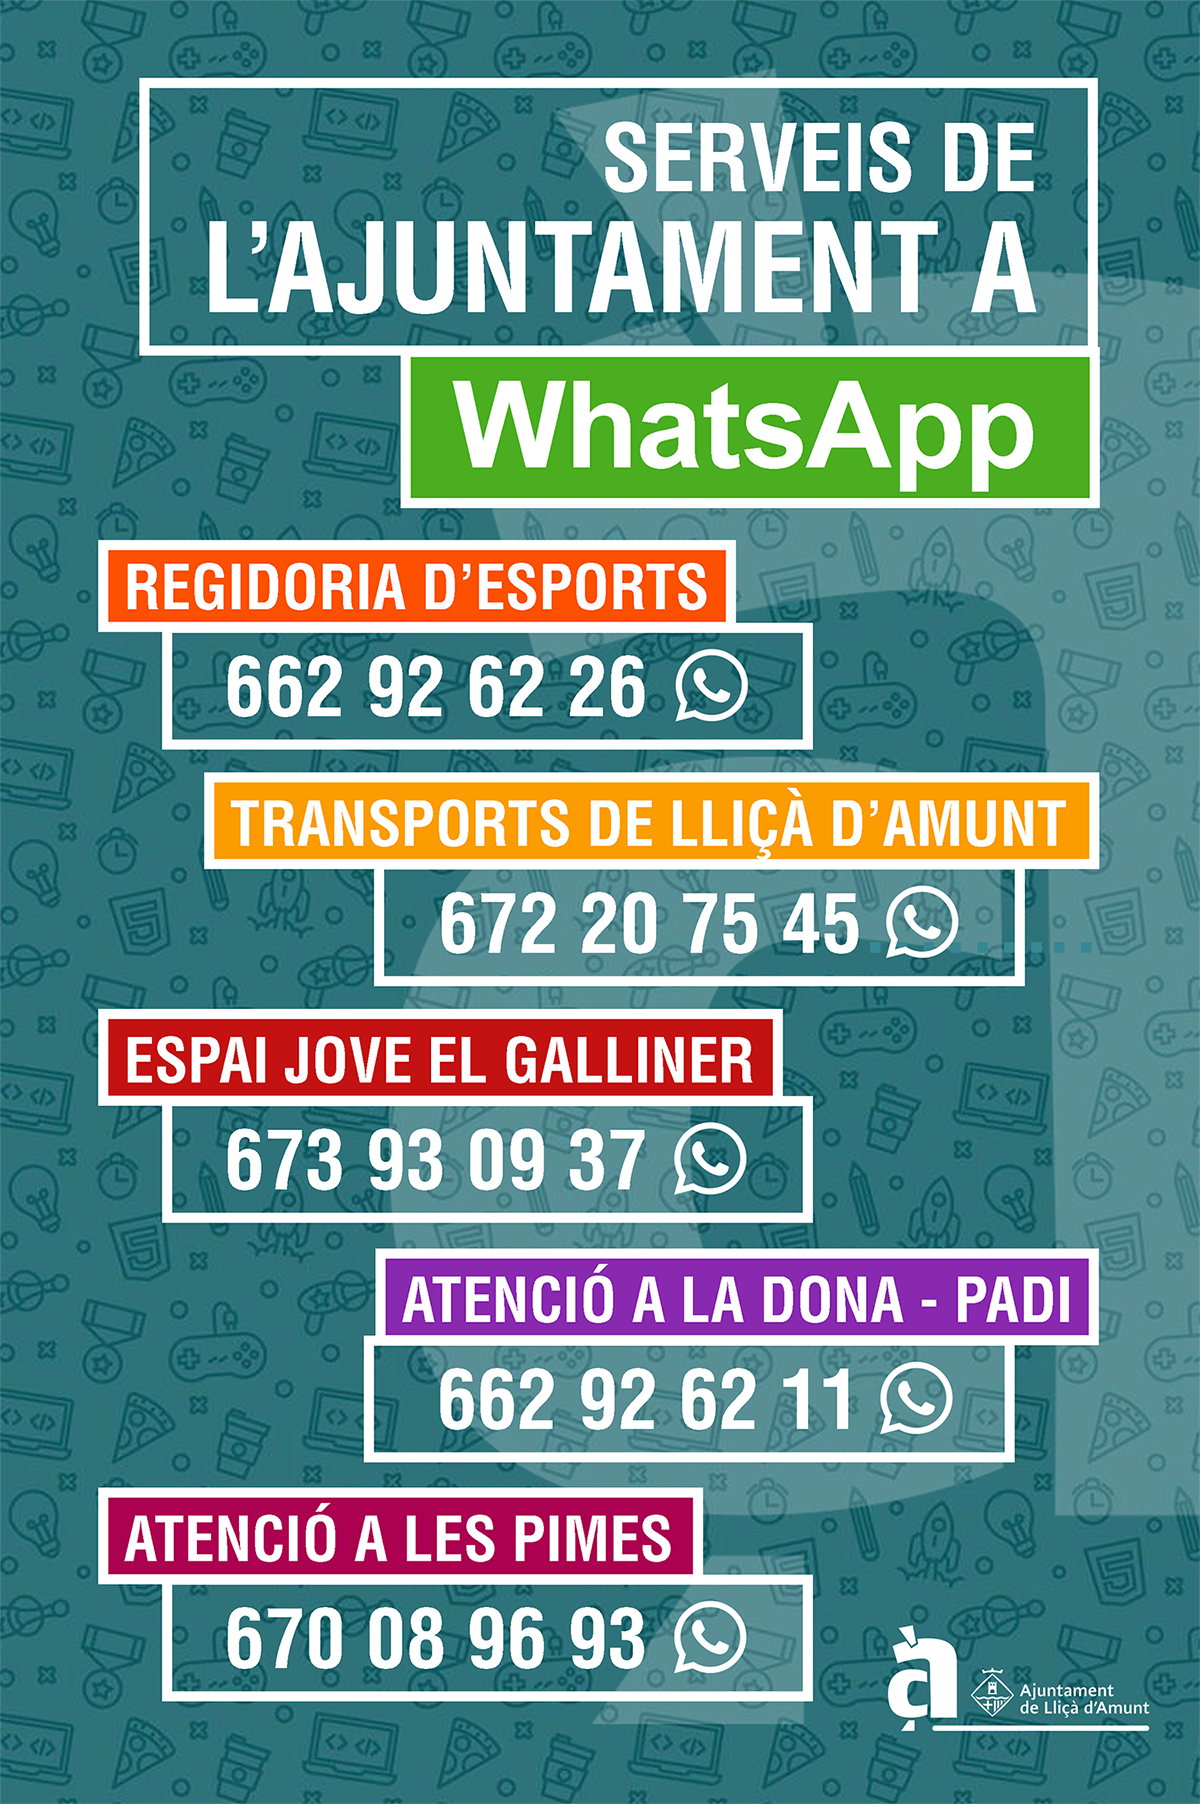 Serveis de WhatsApp 